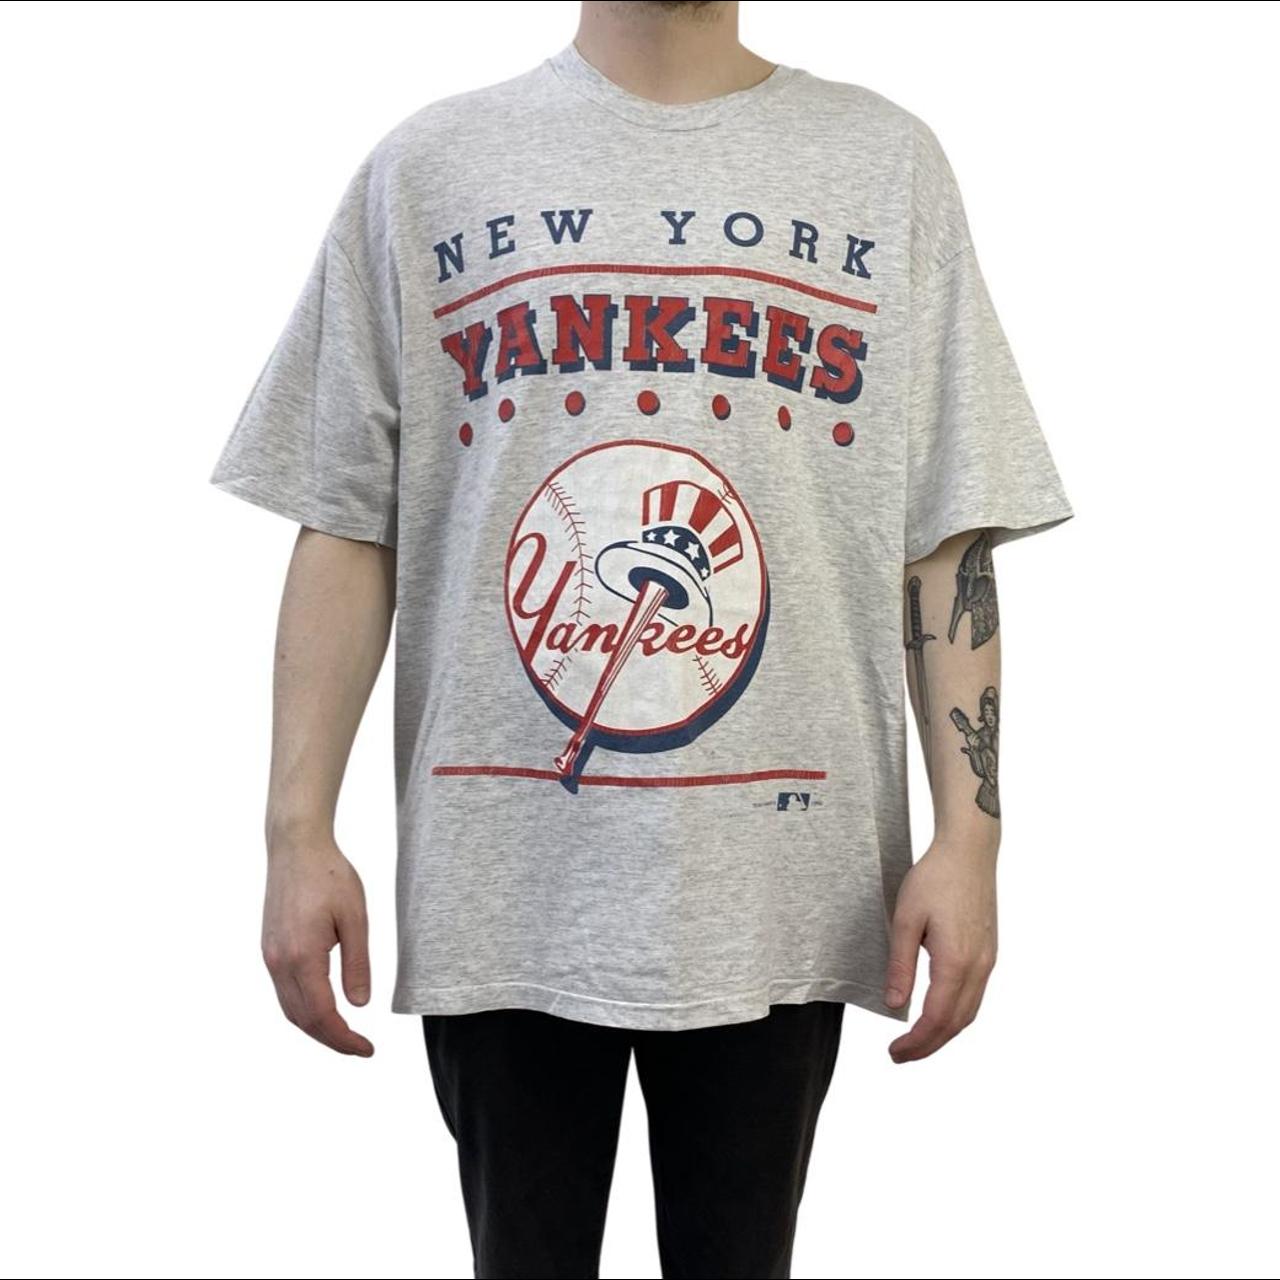 New York Yankees '47 1903 Inaugural Season Vintage Raglan 3/4-Sleeve T-Shirt  - Heathered Gray/